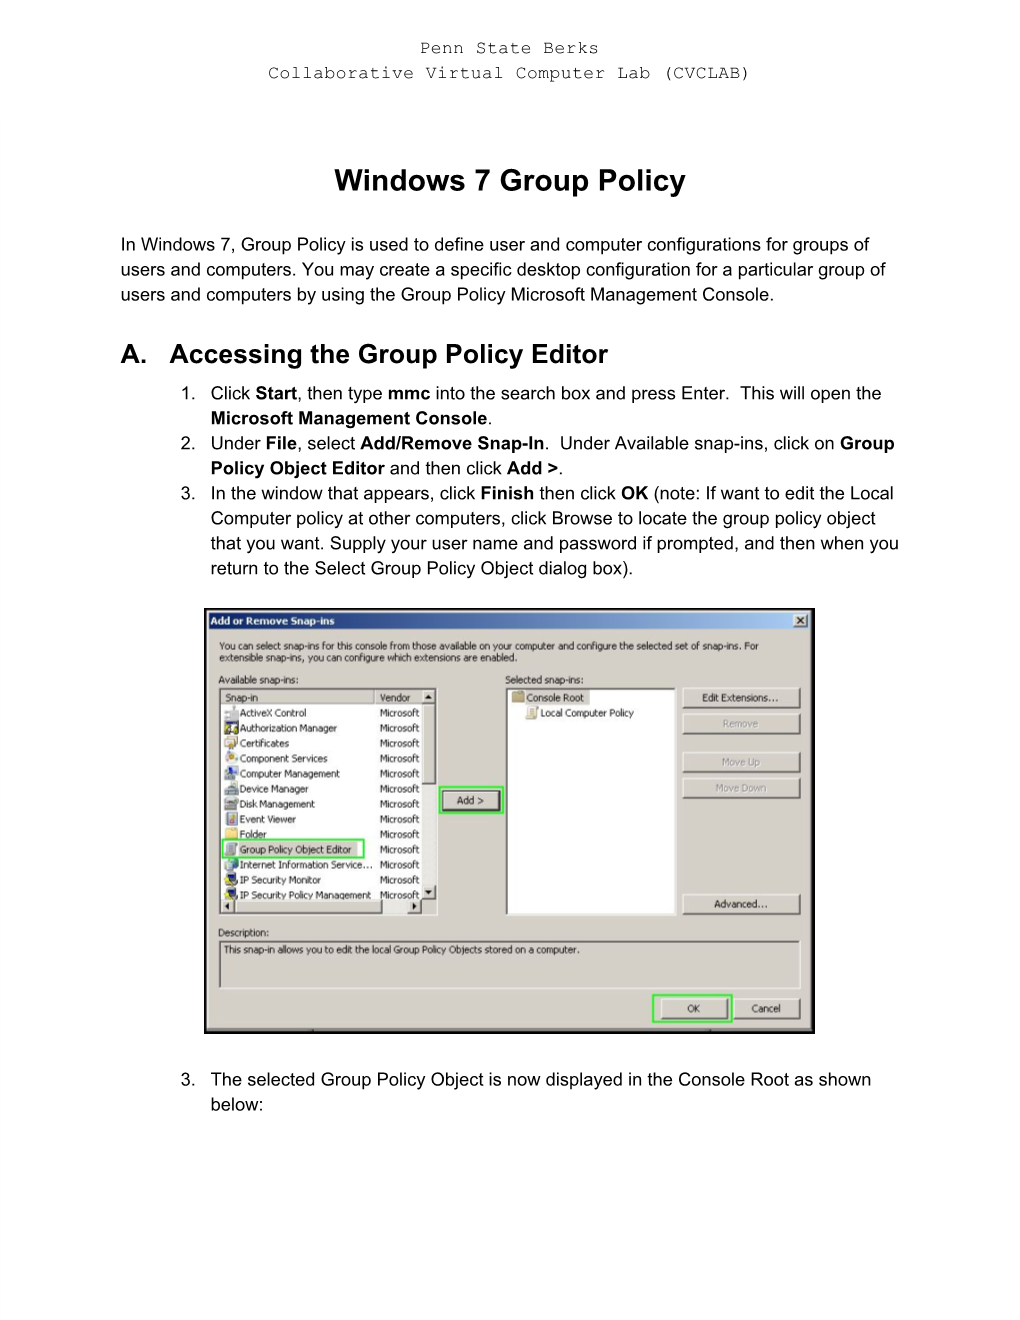 Windows 7 Group Policy